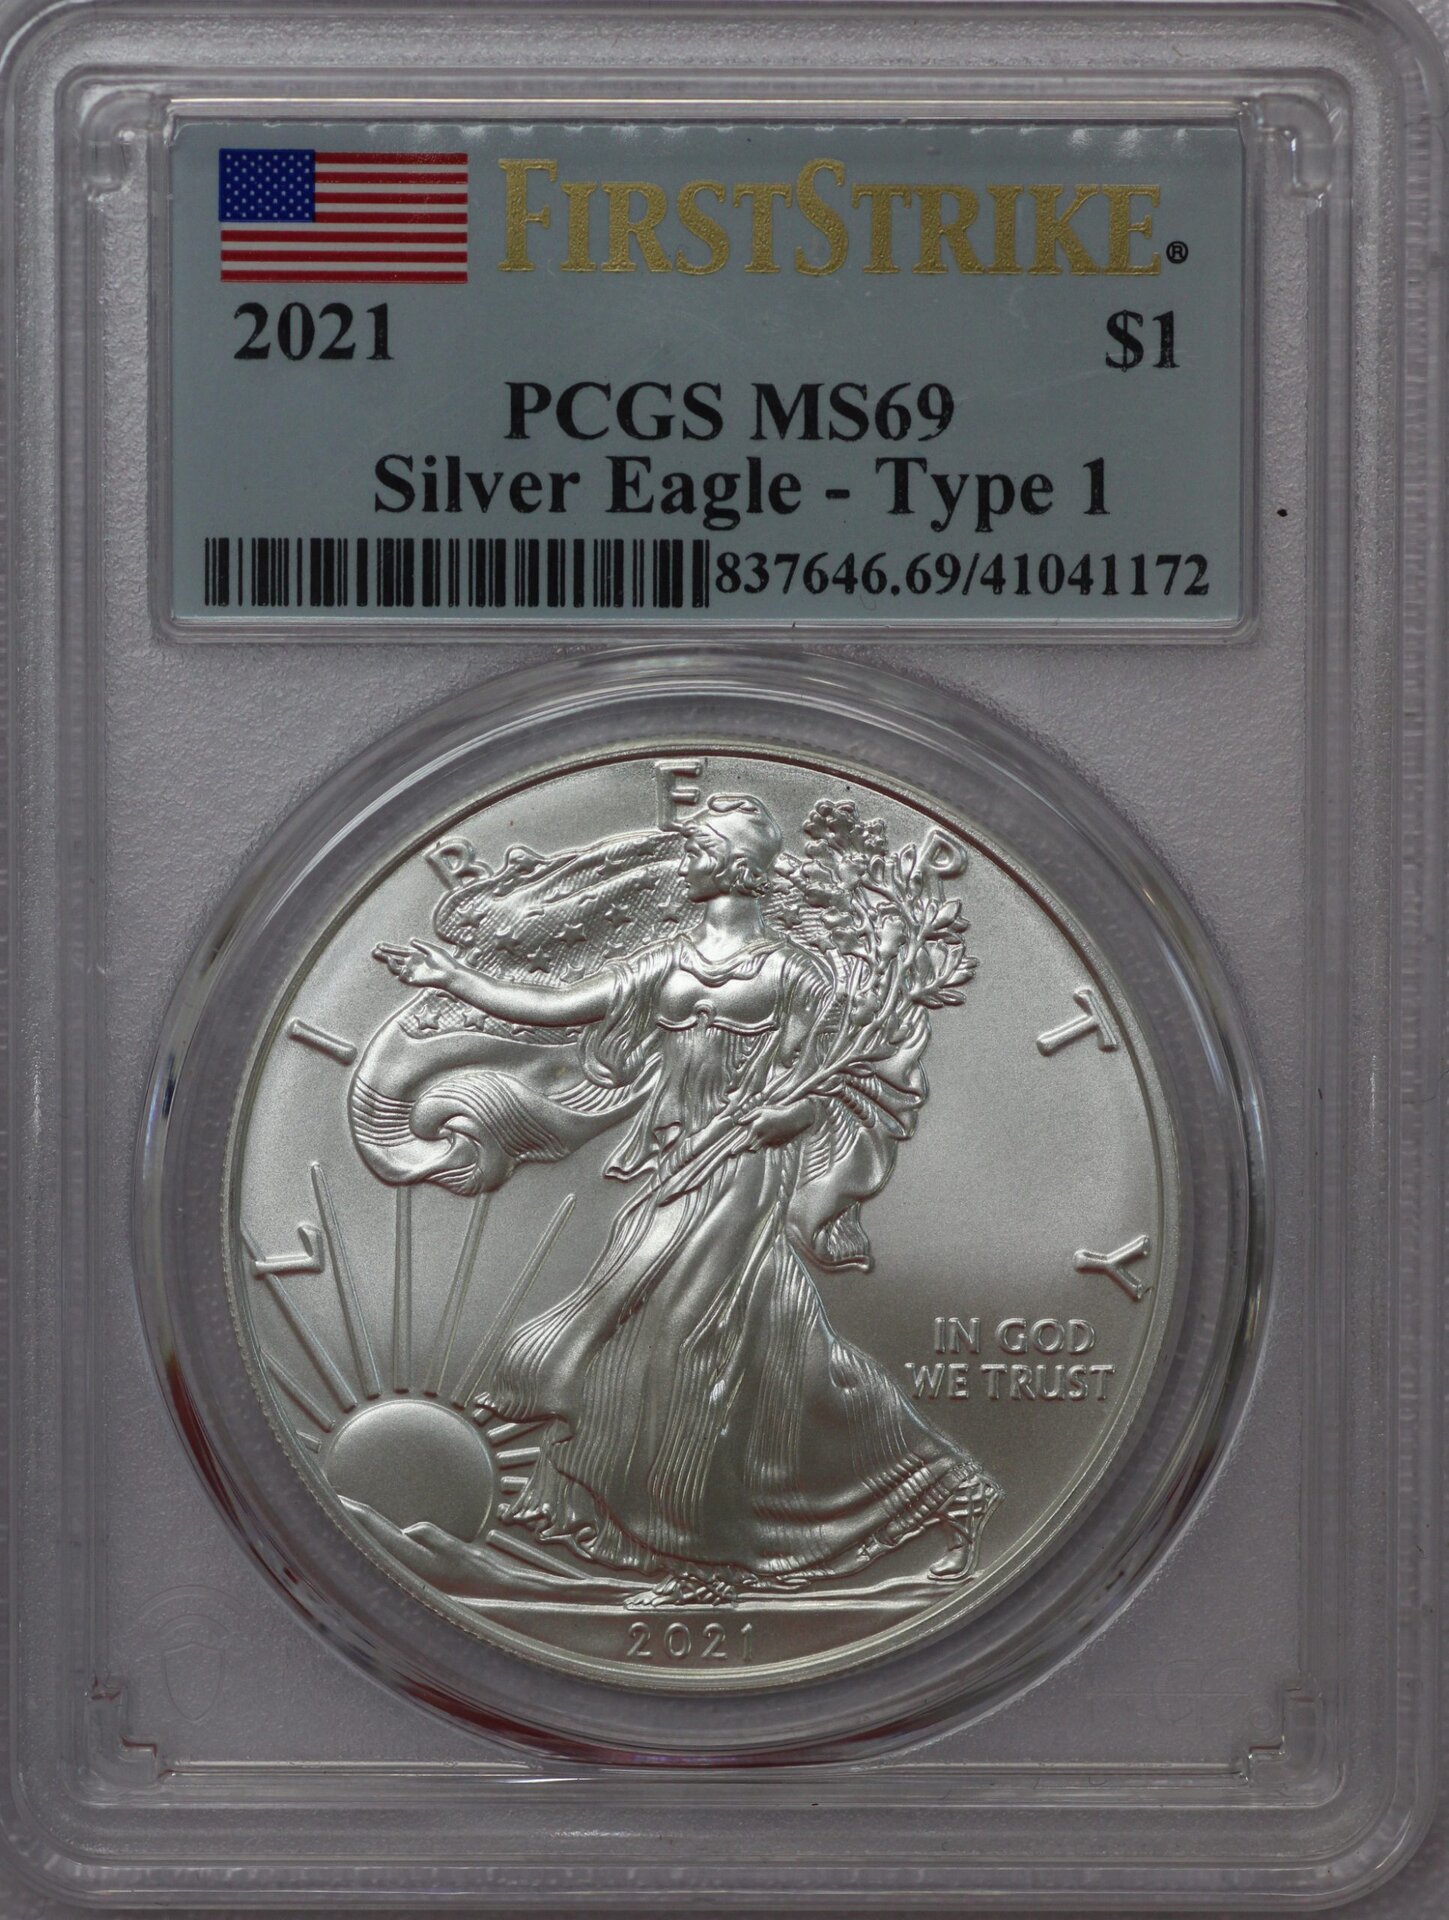 2021-Silver-Eagle-PCGS-MS69-FS-scaled.jpg